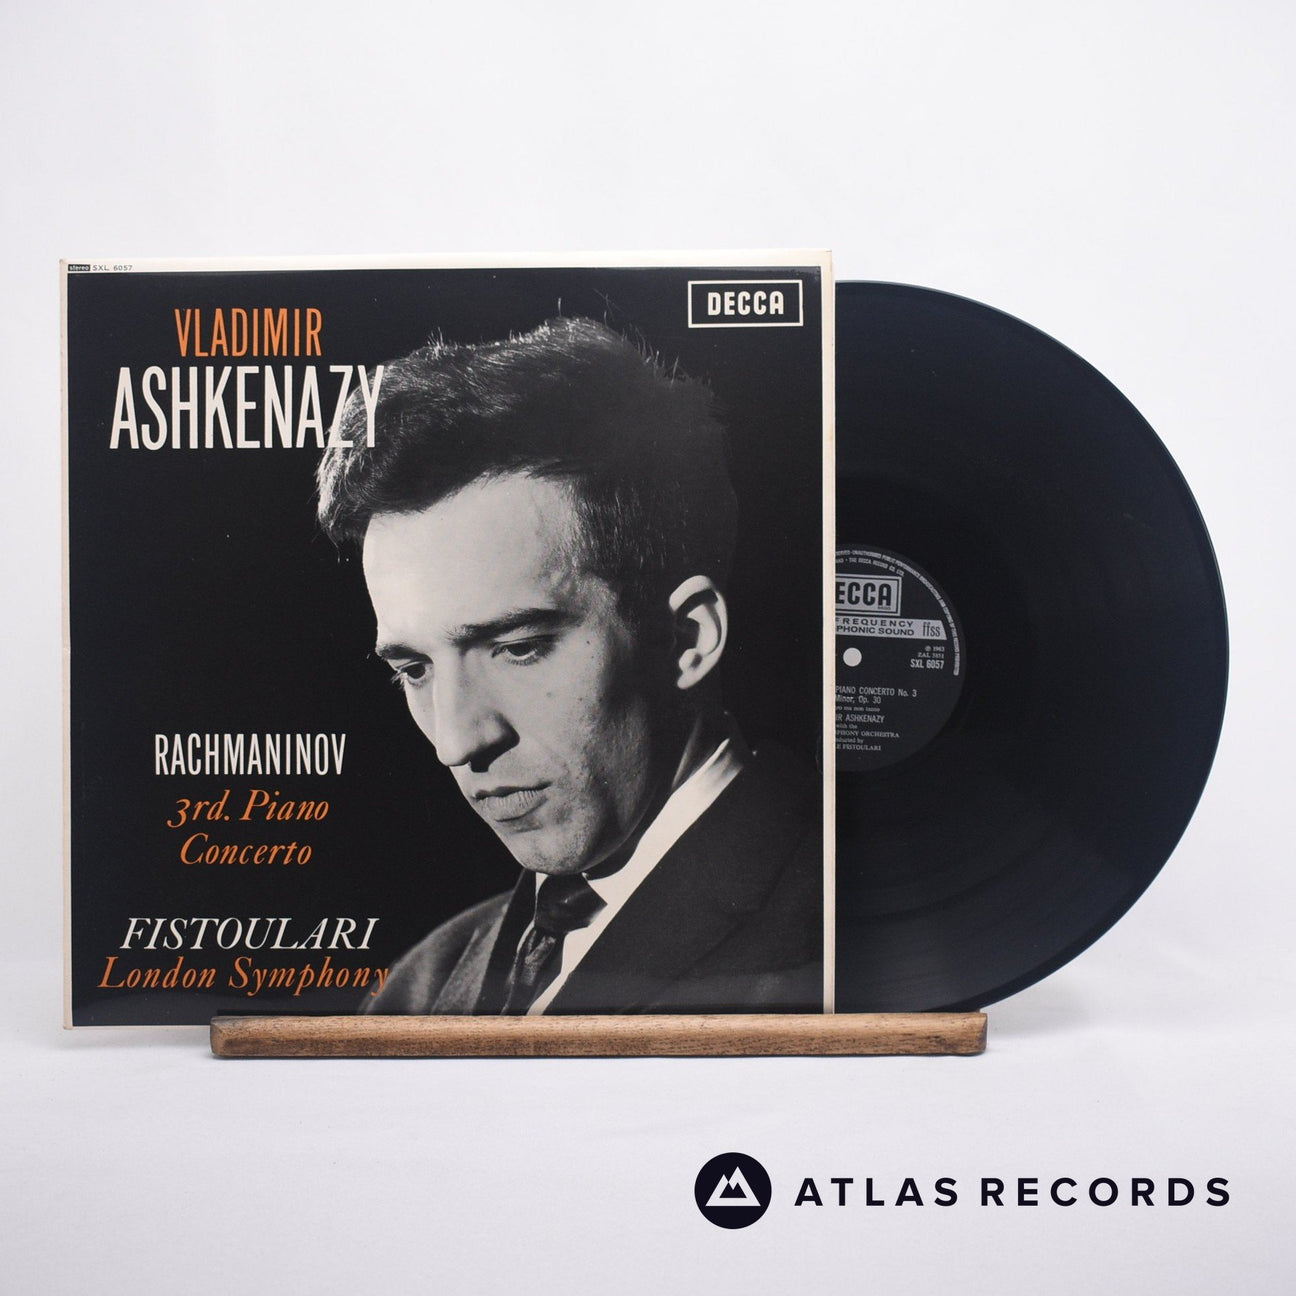 Sergei Vasilyevich Rachmaninoff 3rd. Piano Concerto LP Vinyl Record - Front Cover & Record